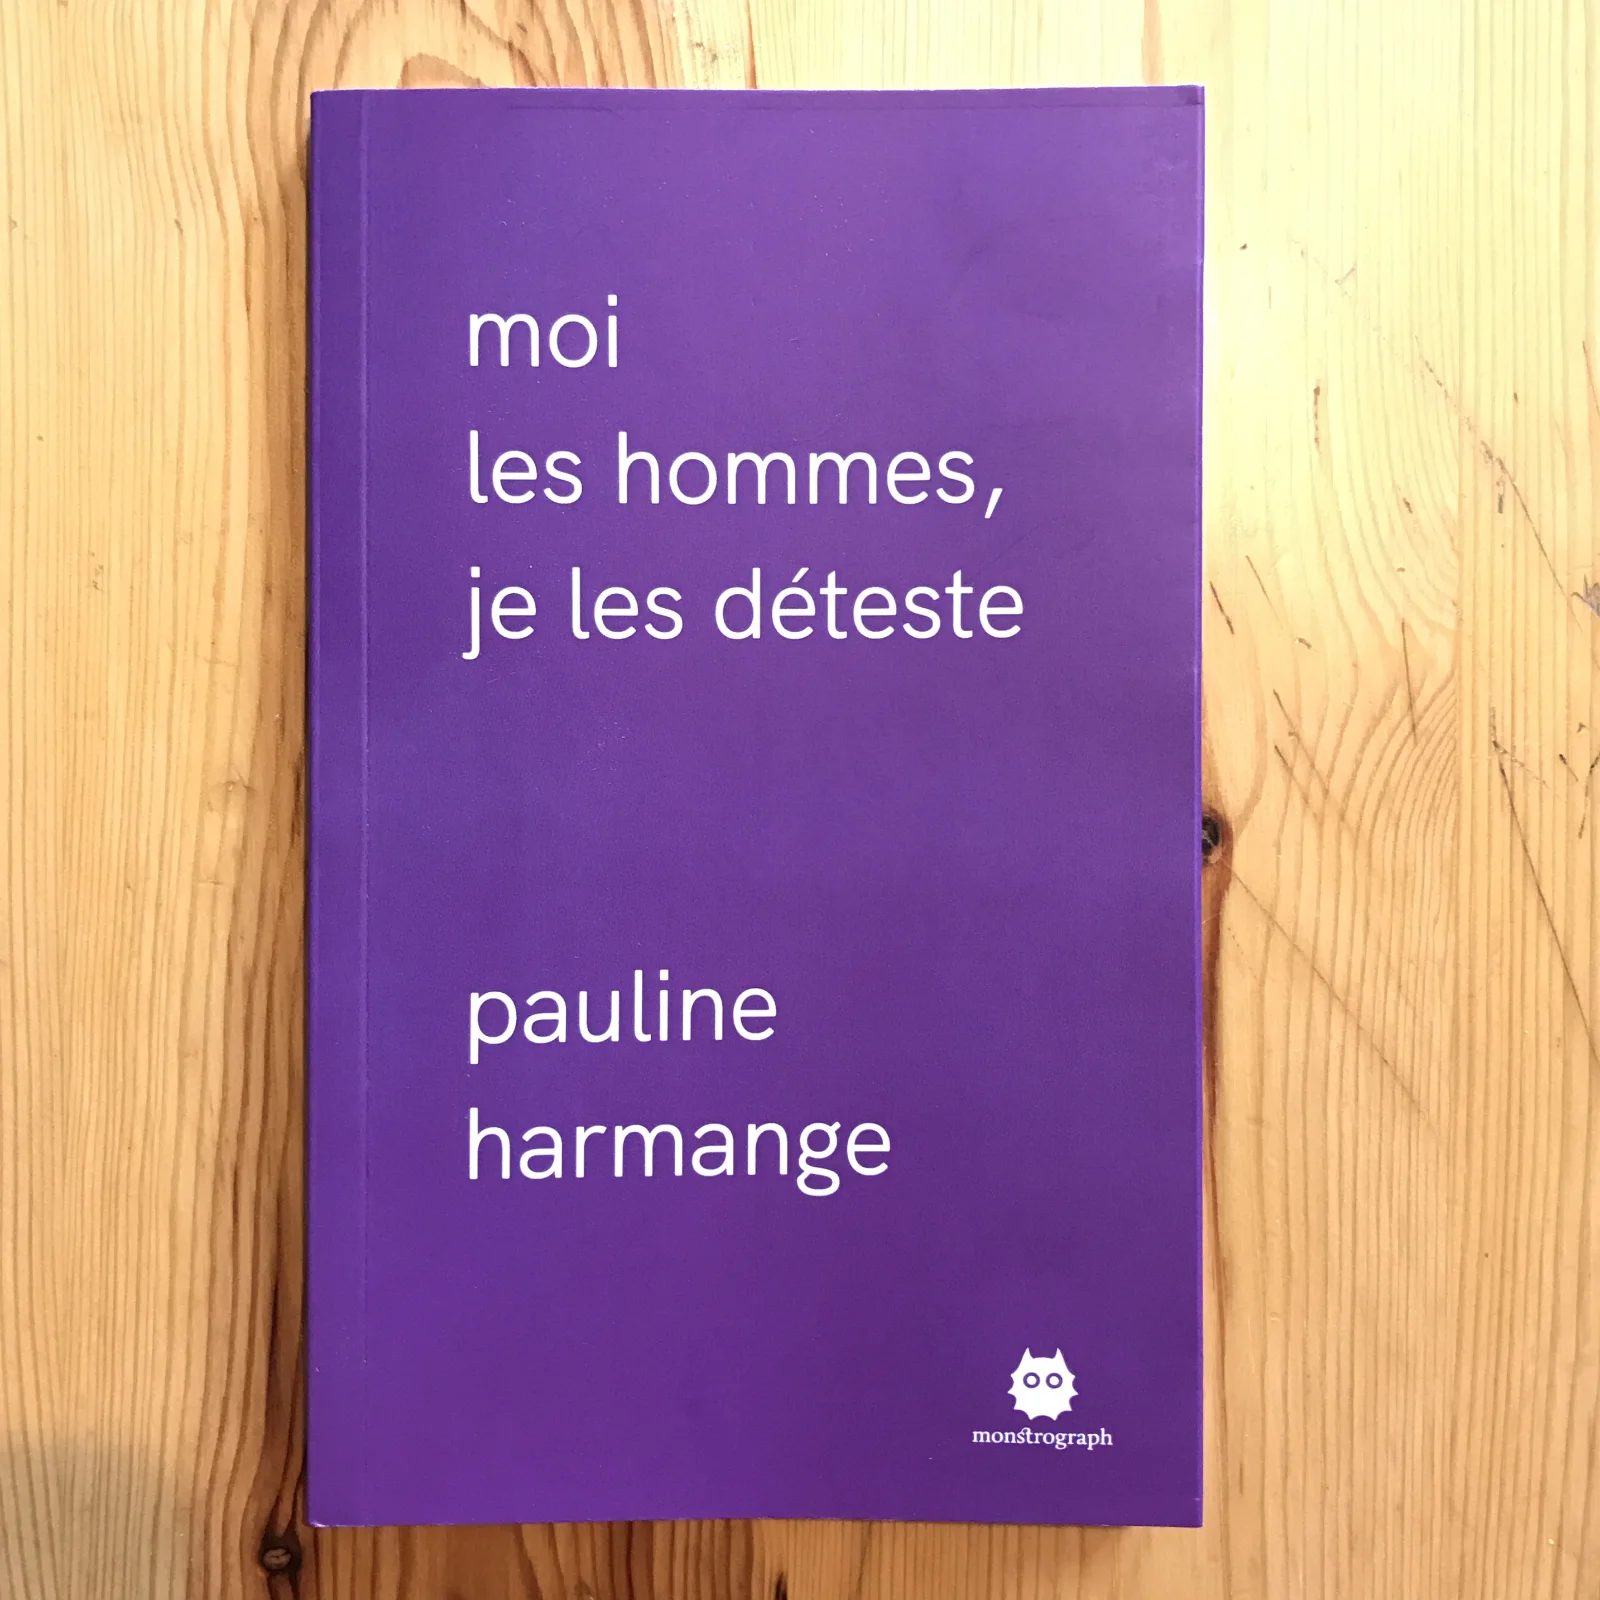 Во Франции хотели запретить книгу «Я ненавижу мужчин», а в итоге увеличили ее продажи - фото 1